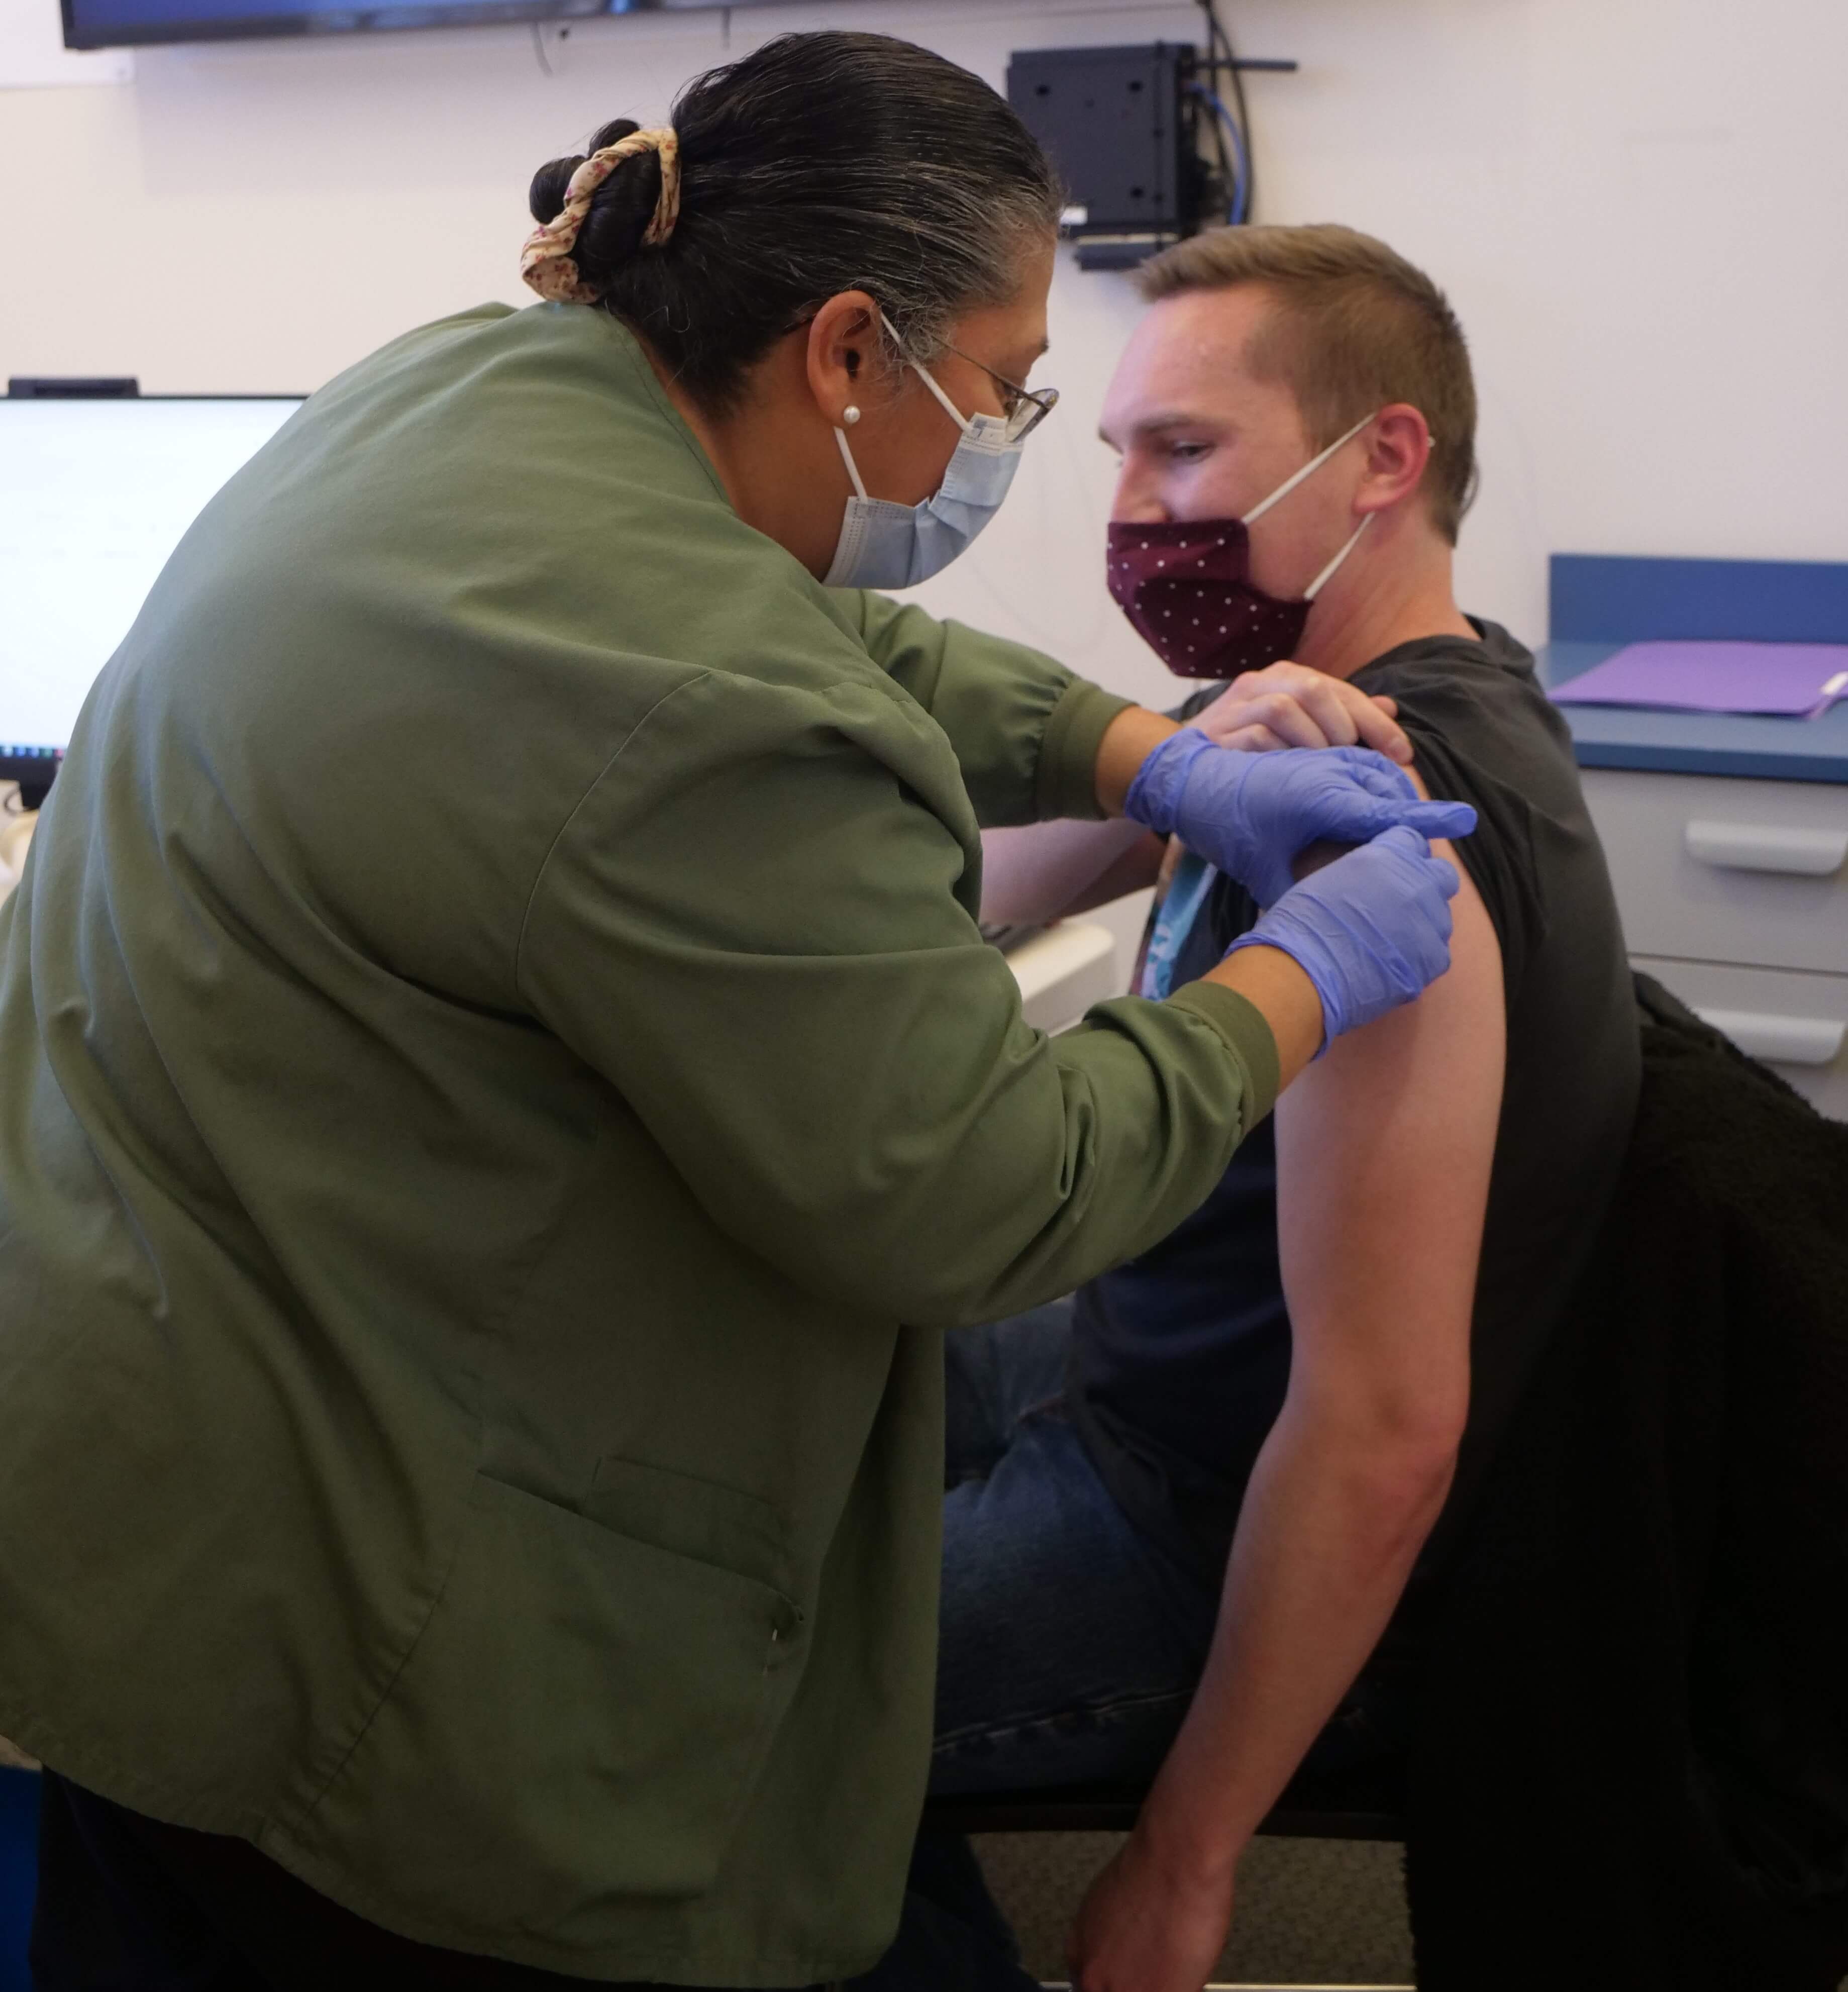 Nurse vaccinates man's arm